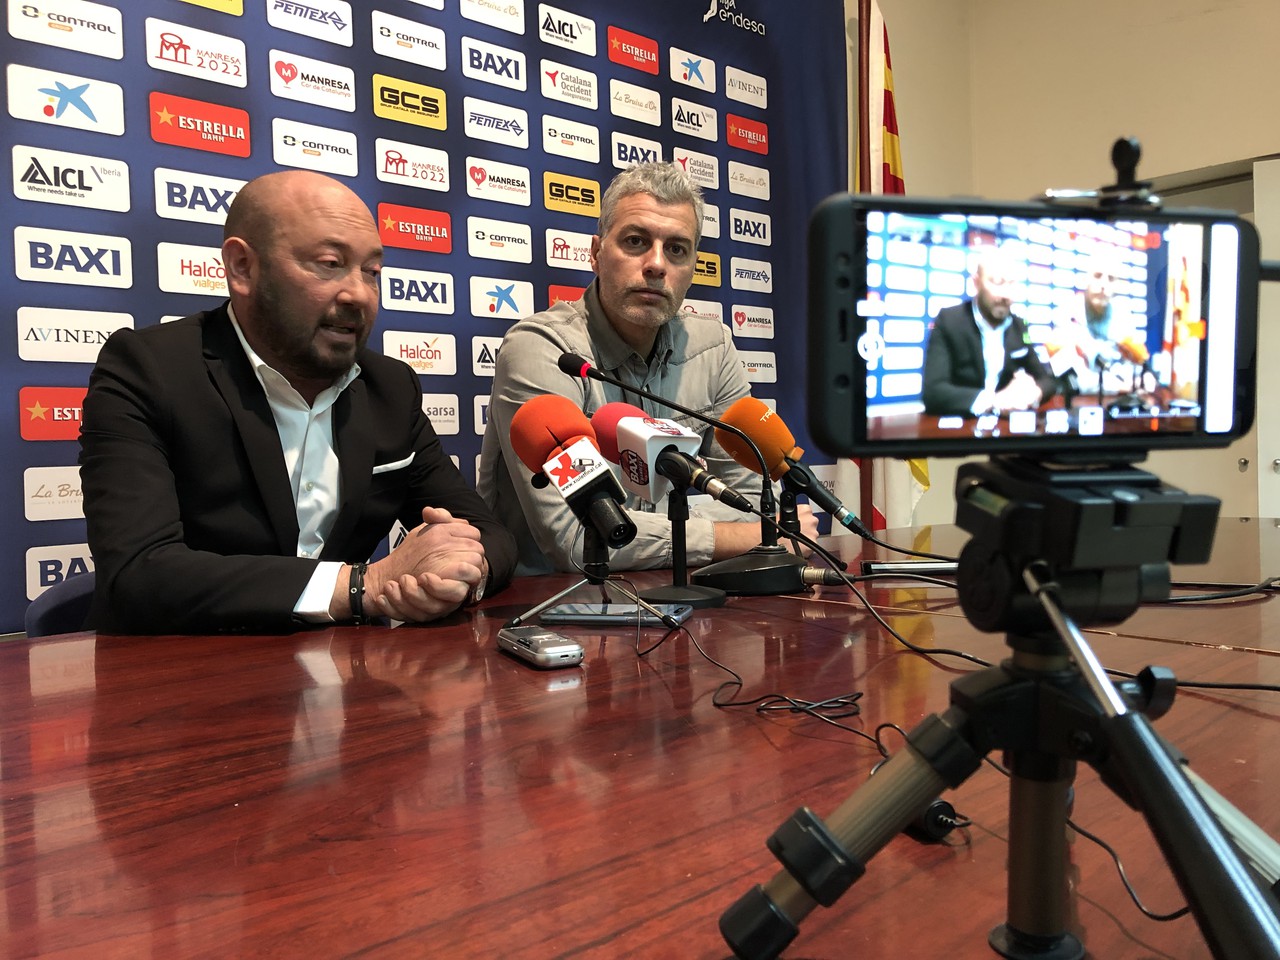 Bàsquet Manresa decides not to renew Román Montañez as Sports Director